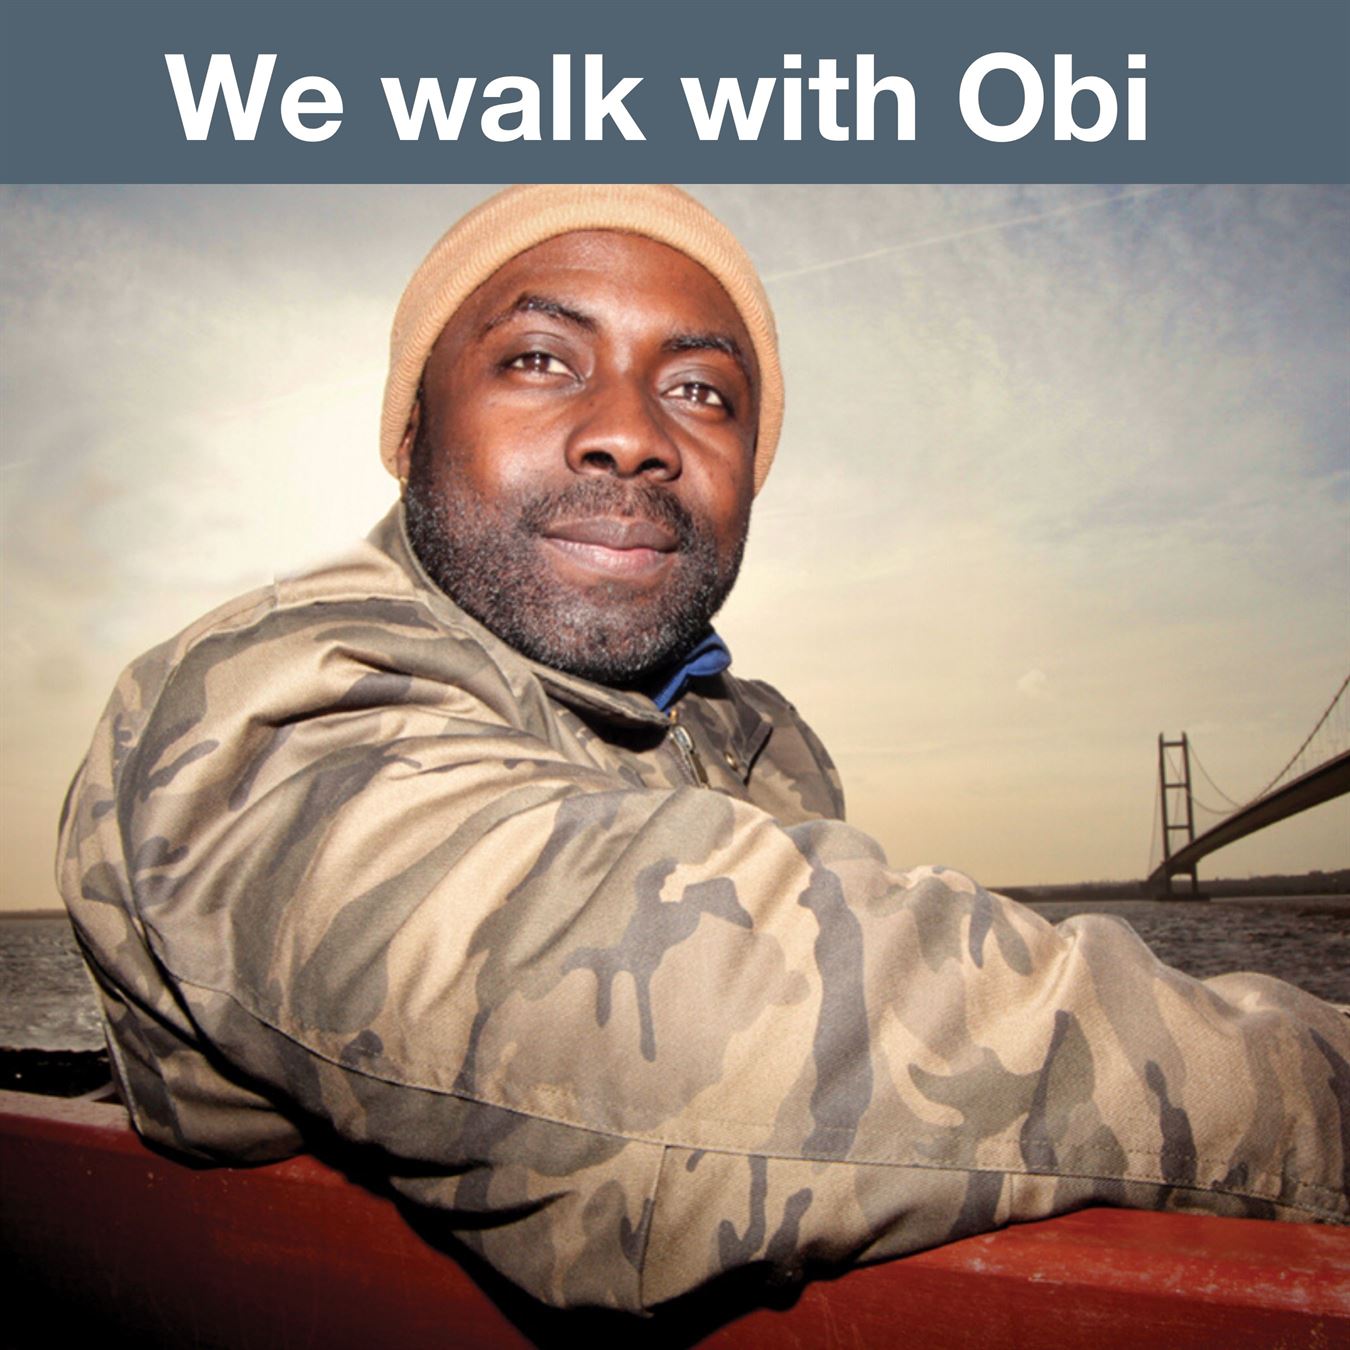 We walk with Obi- gallery image - We walk with Obi- gallery image 